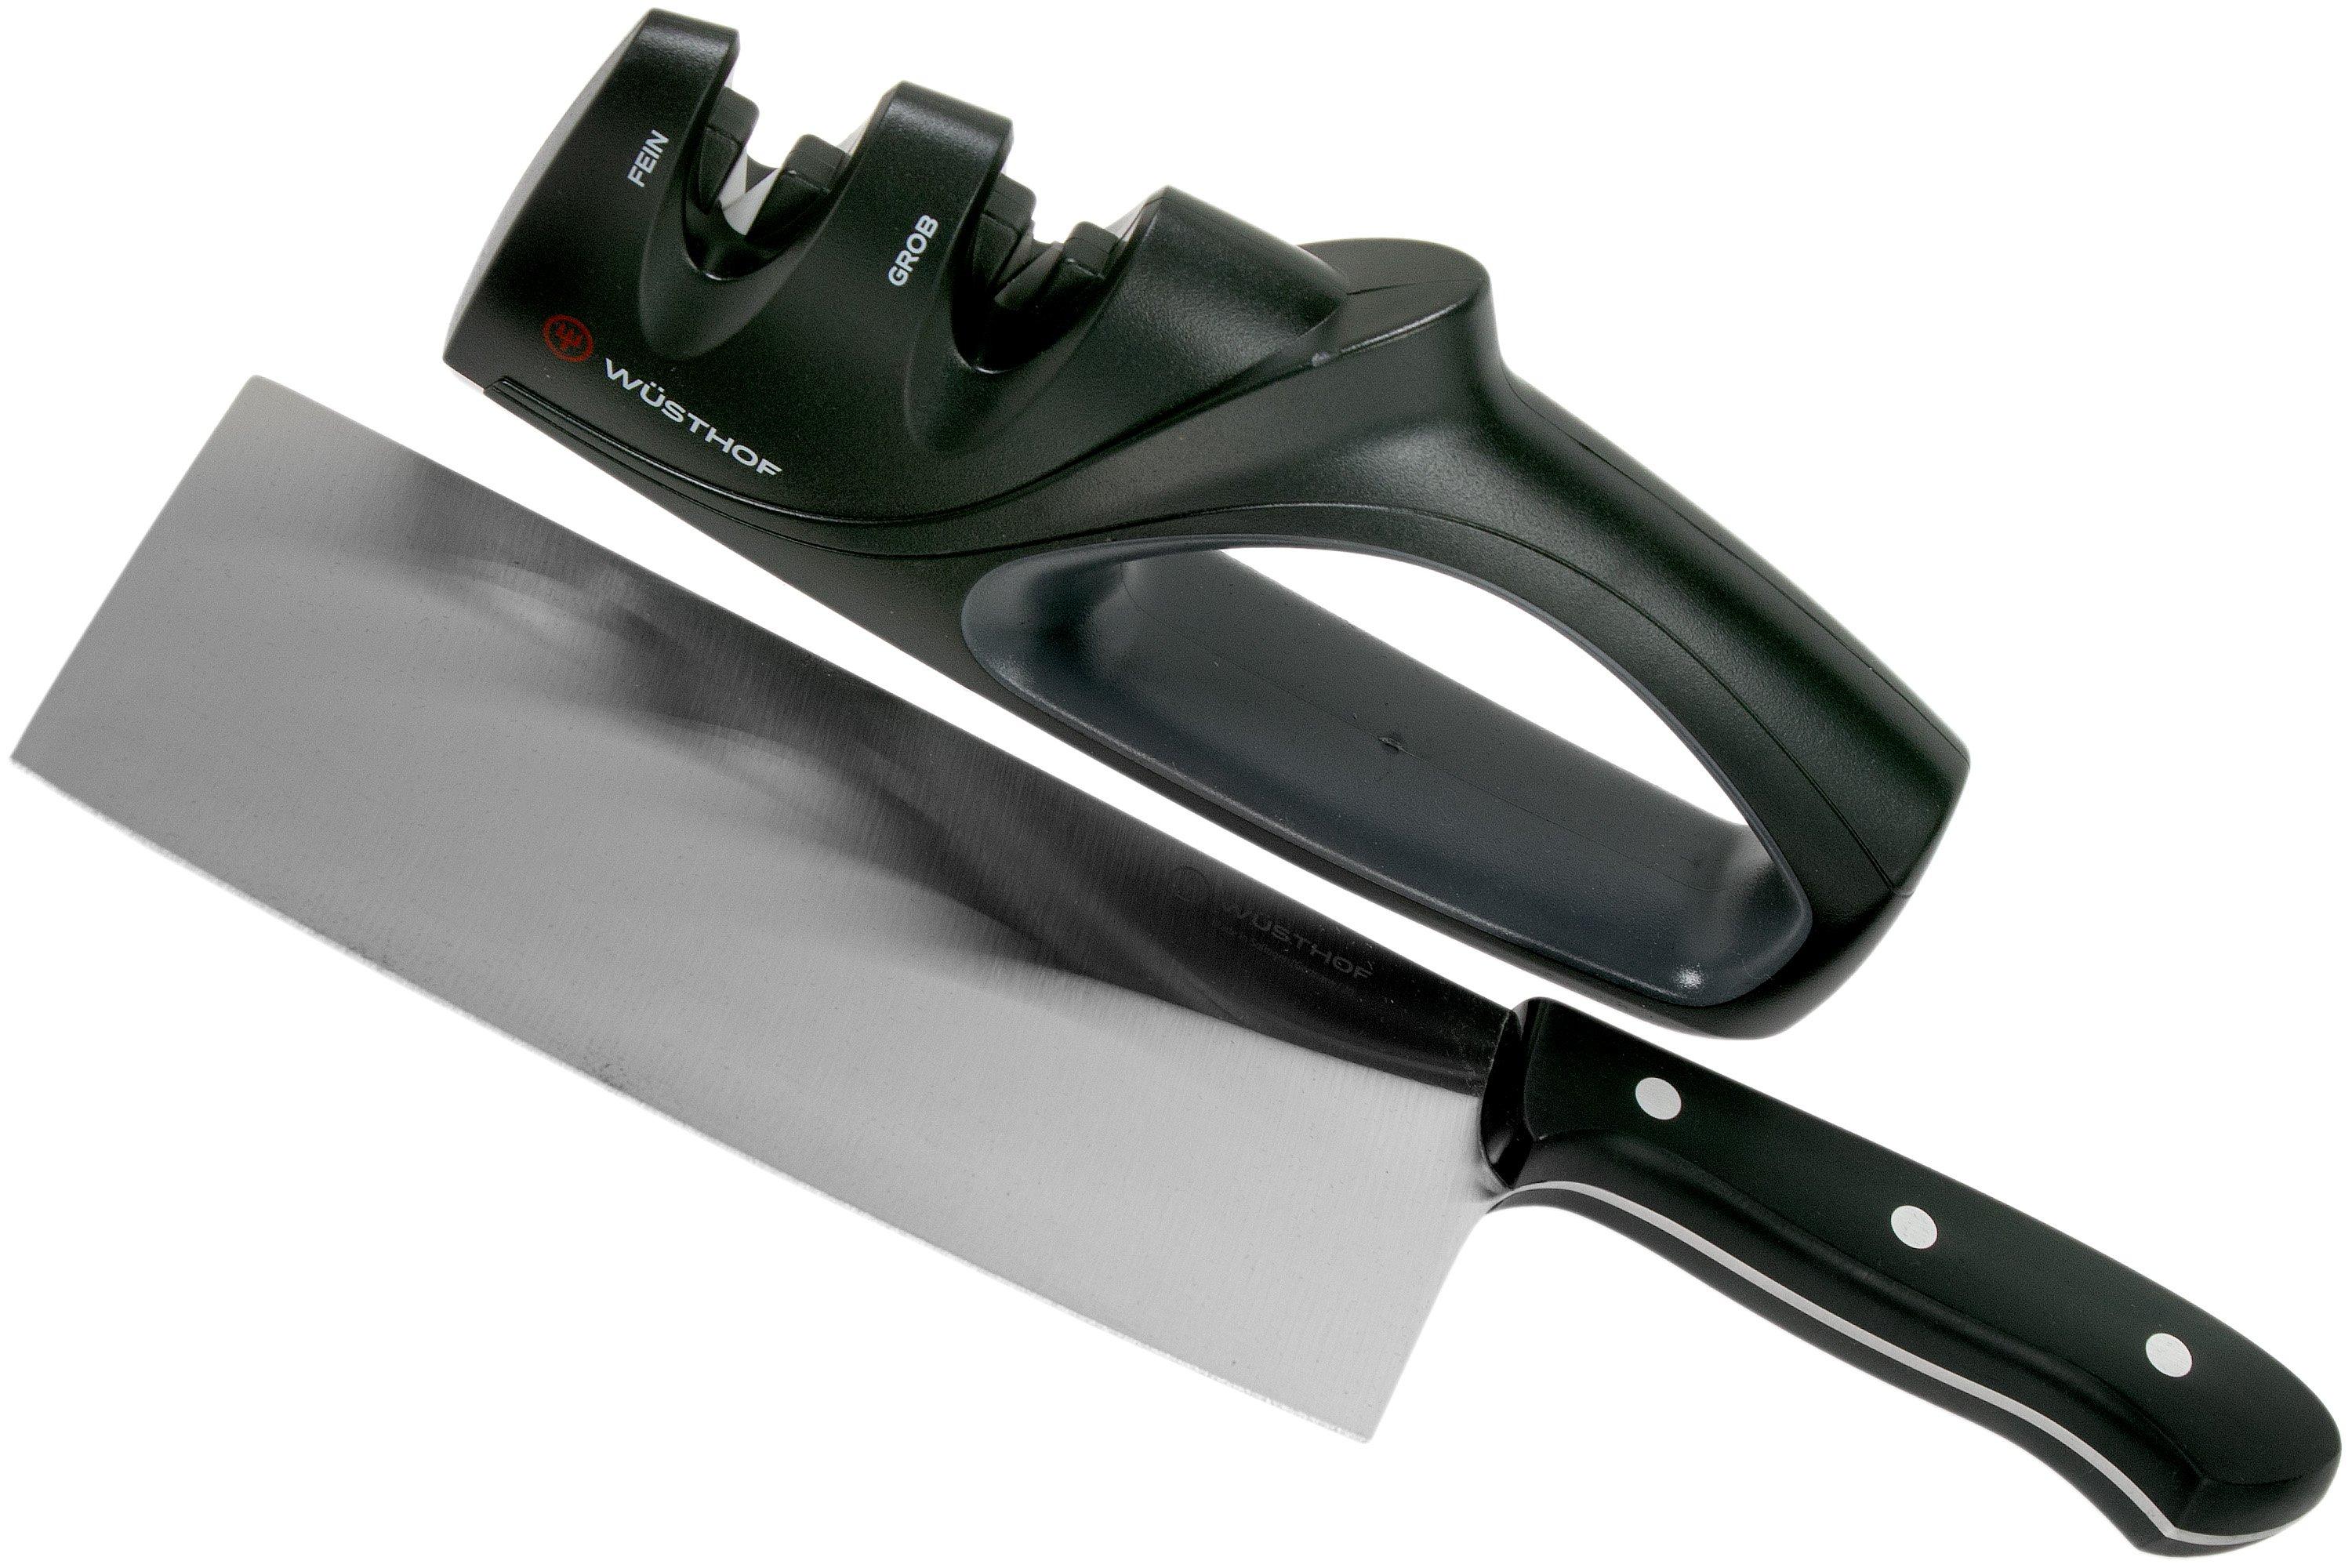 Wusthof Kitchen Knife Sharpeners